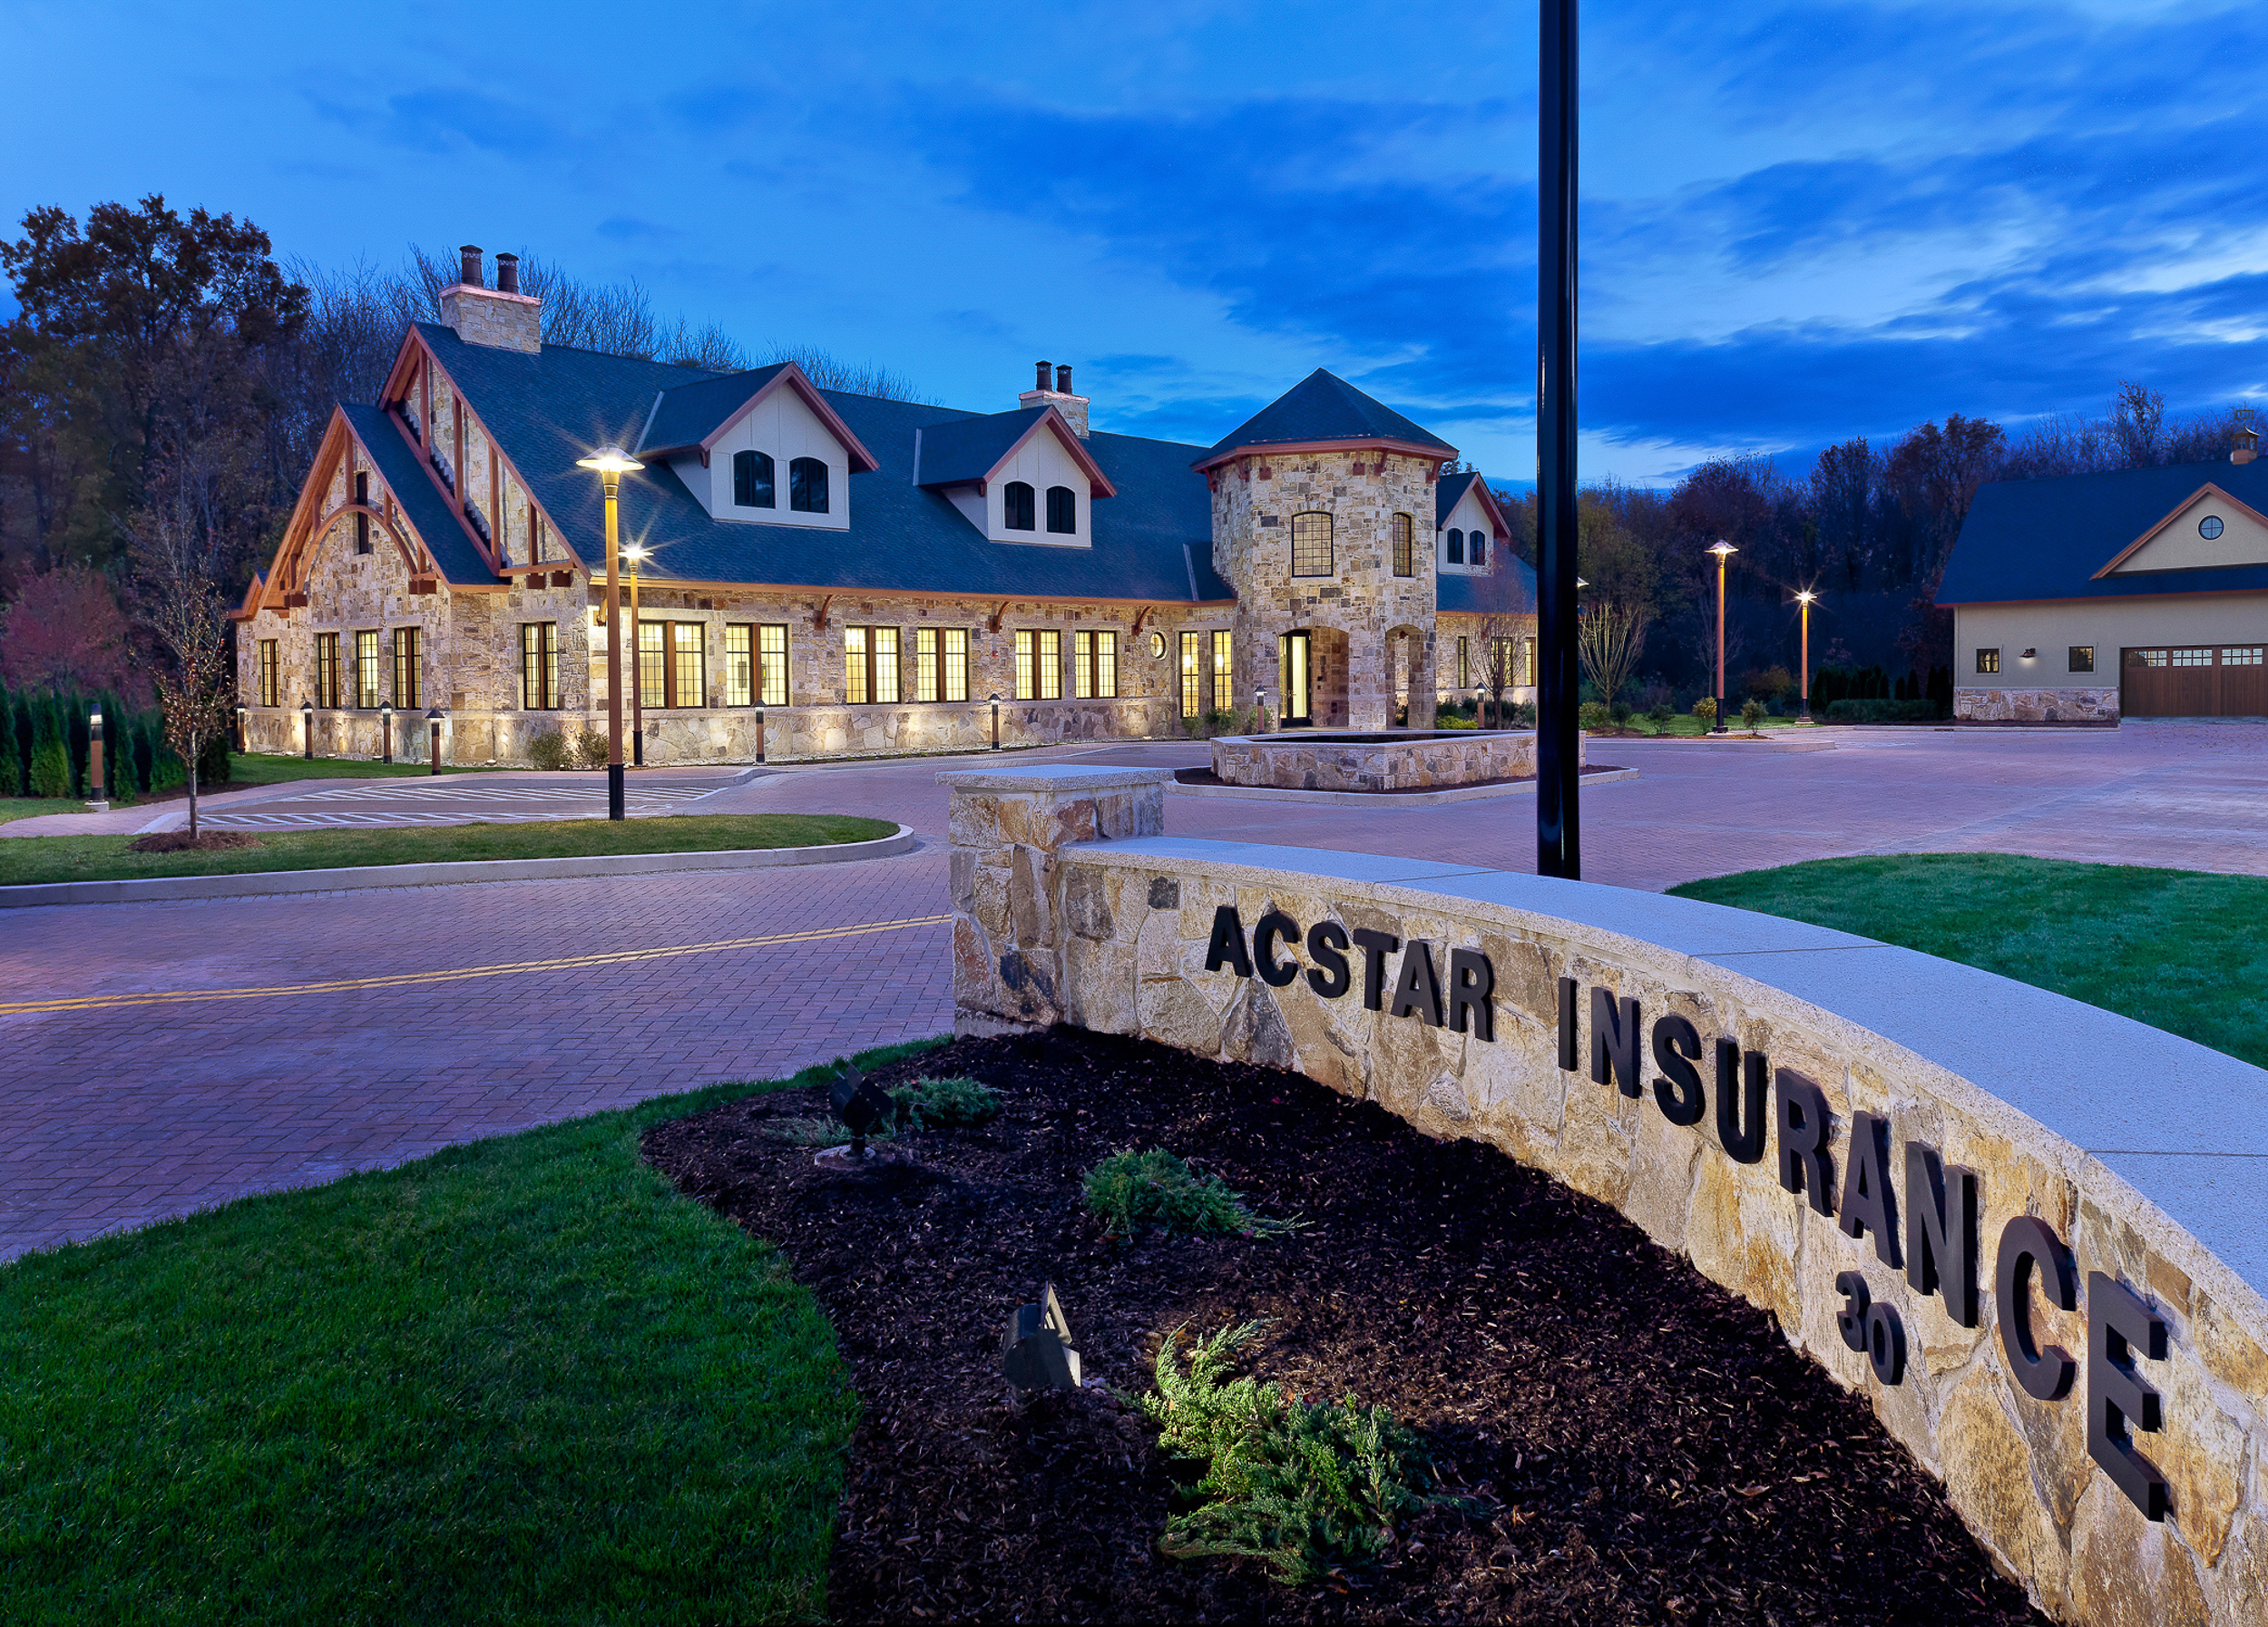 Acstar Insurance HQ, Farmington, CT. 